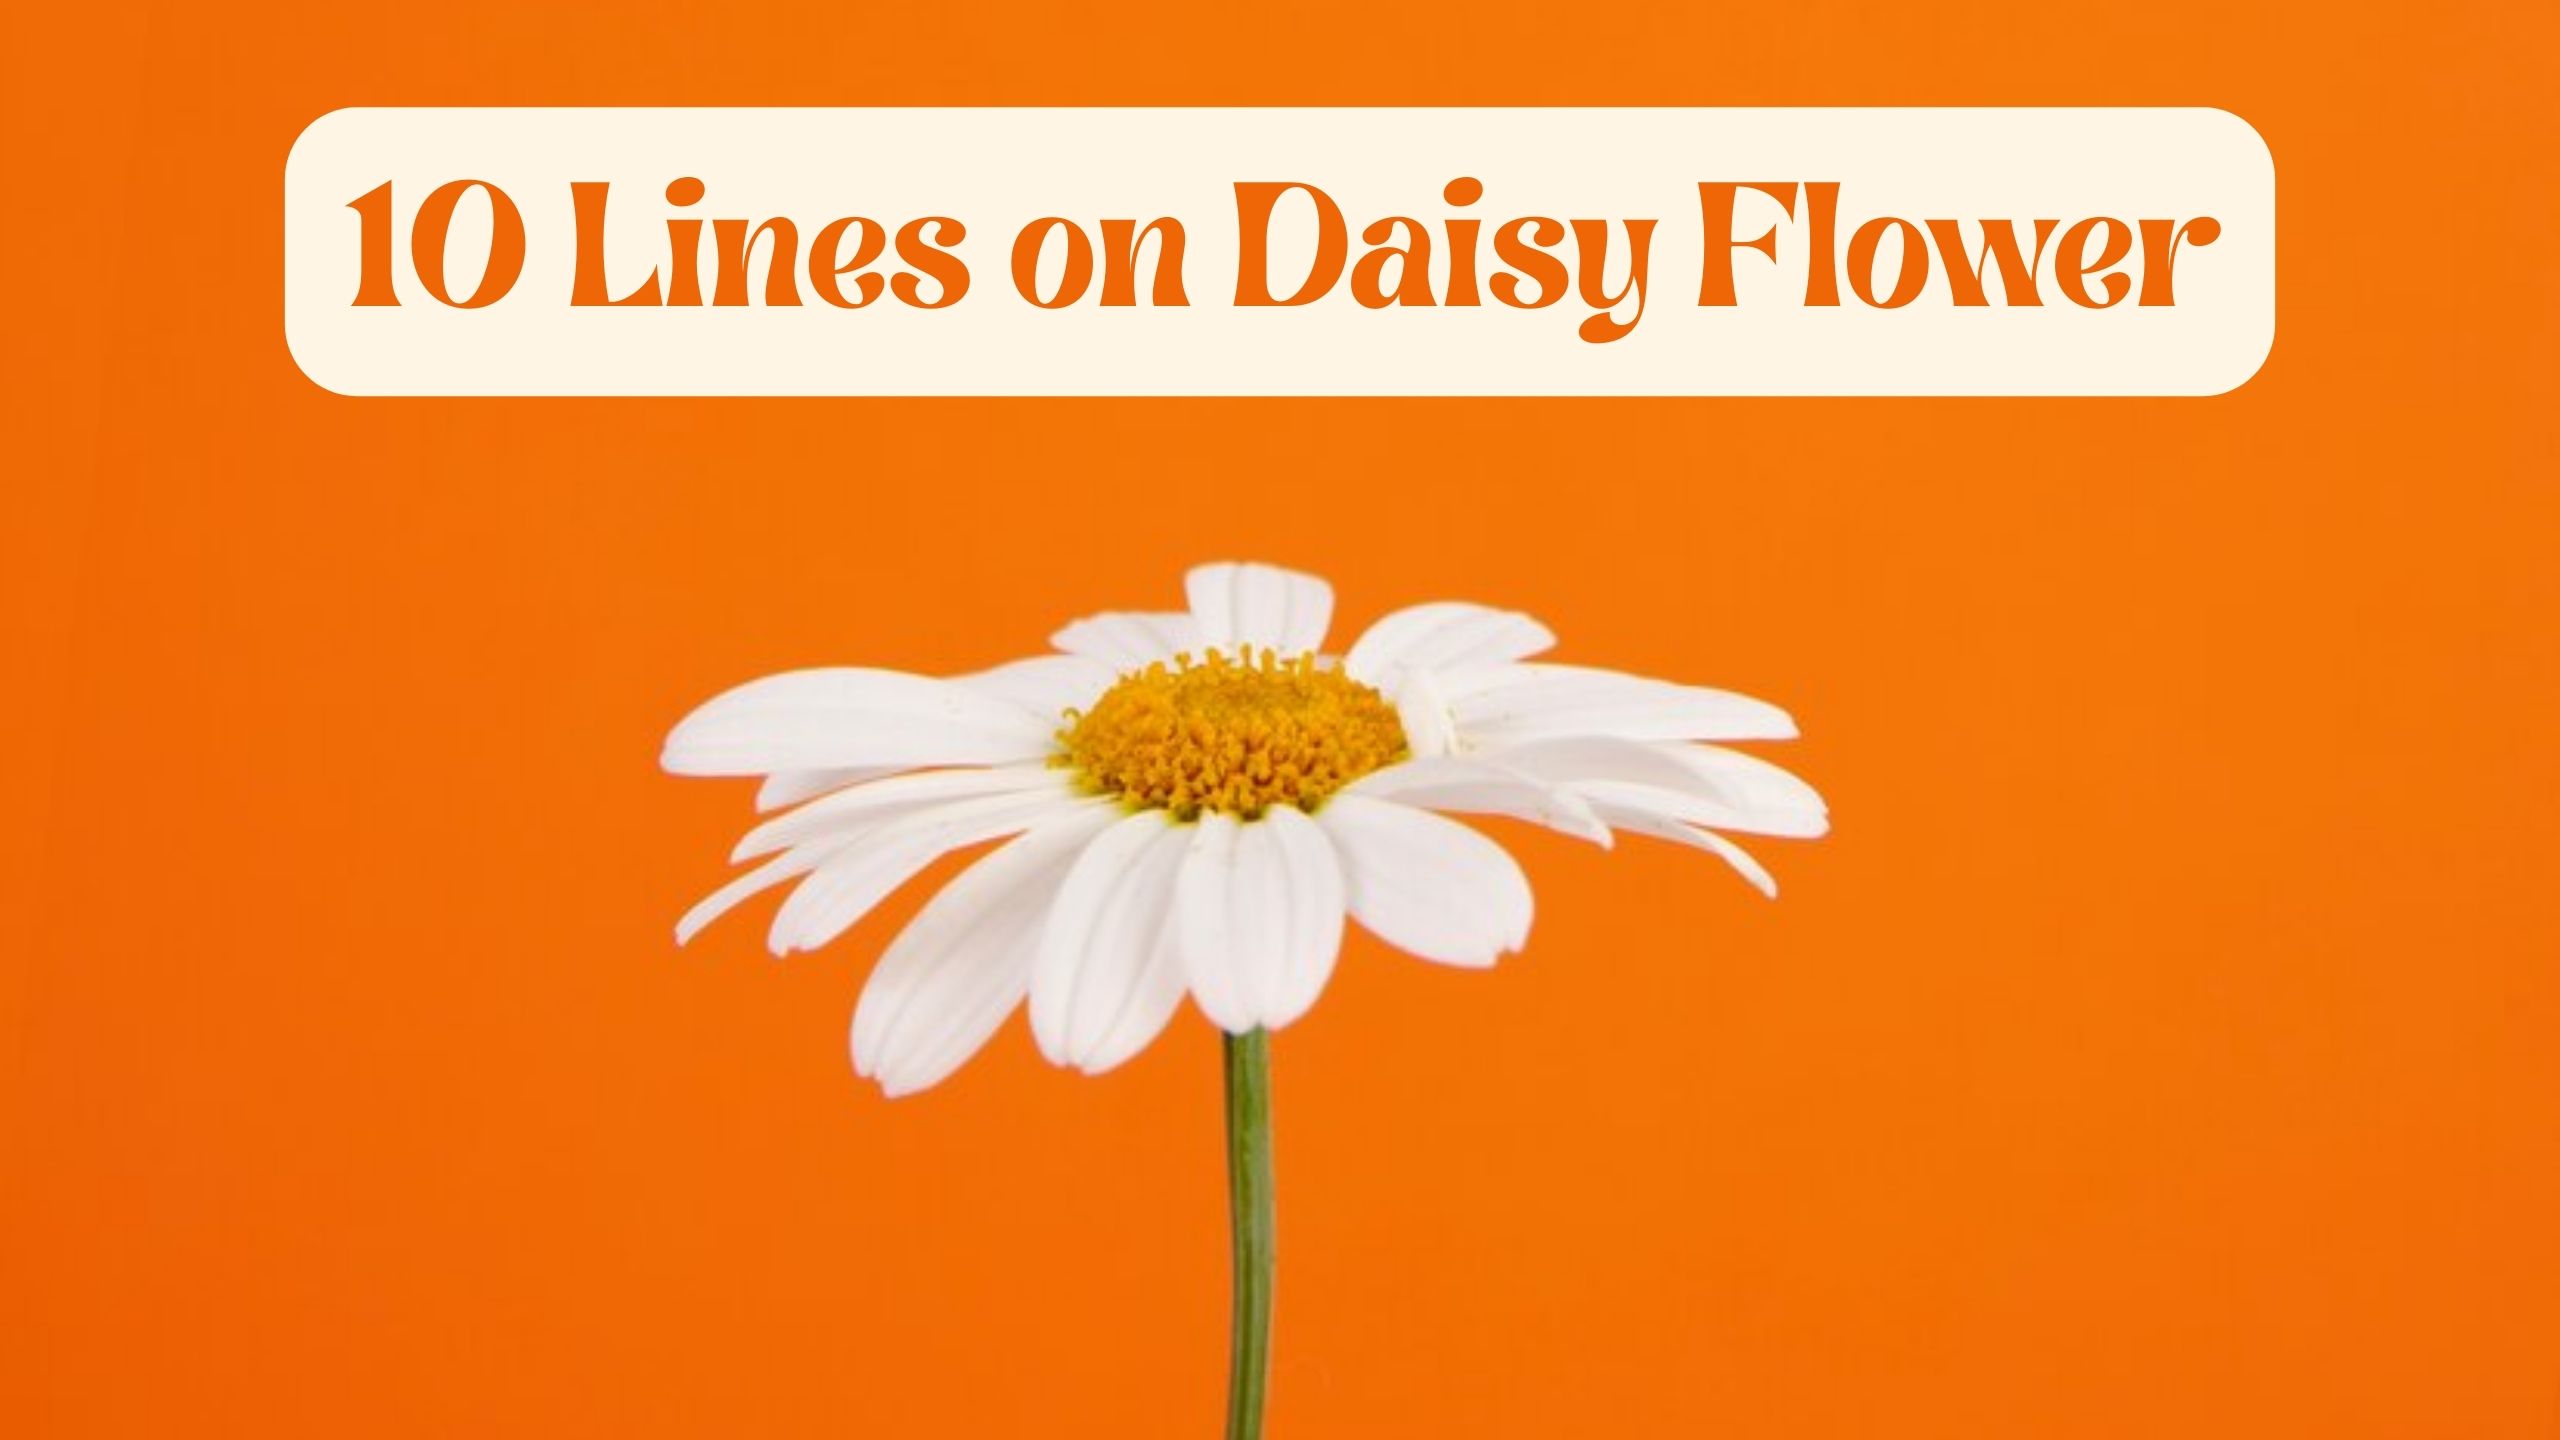 10 Lines on Daisy Flower